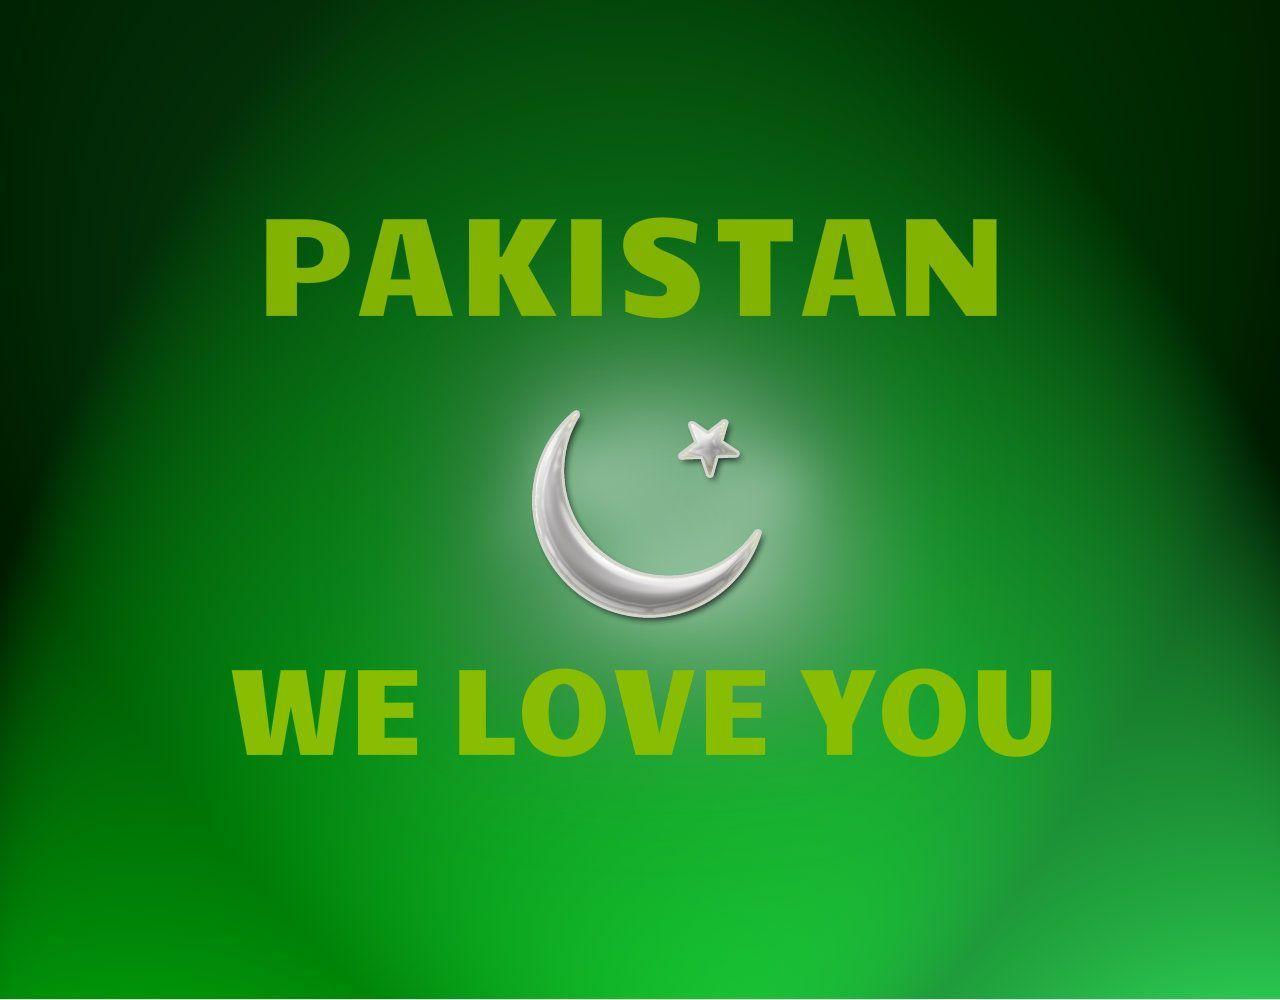 Free Download Pakistan Cricket HD Wallpaper for Desktop. Most HD